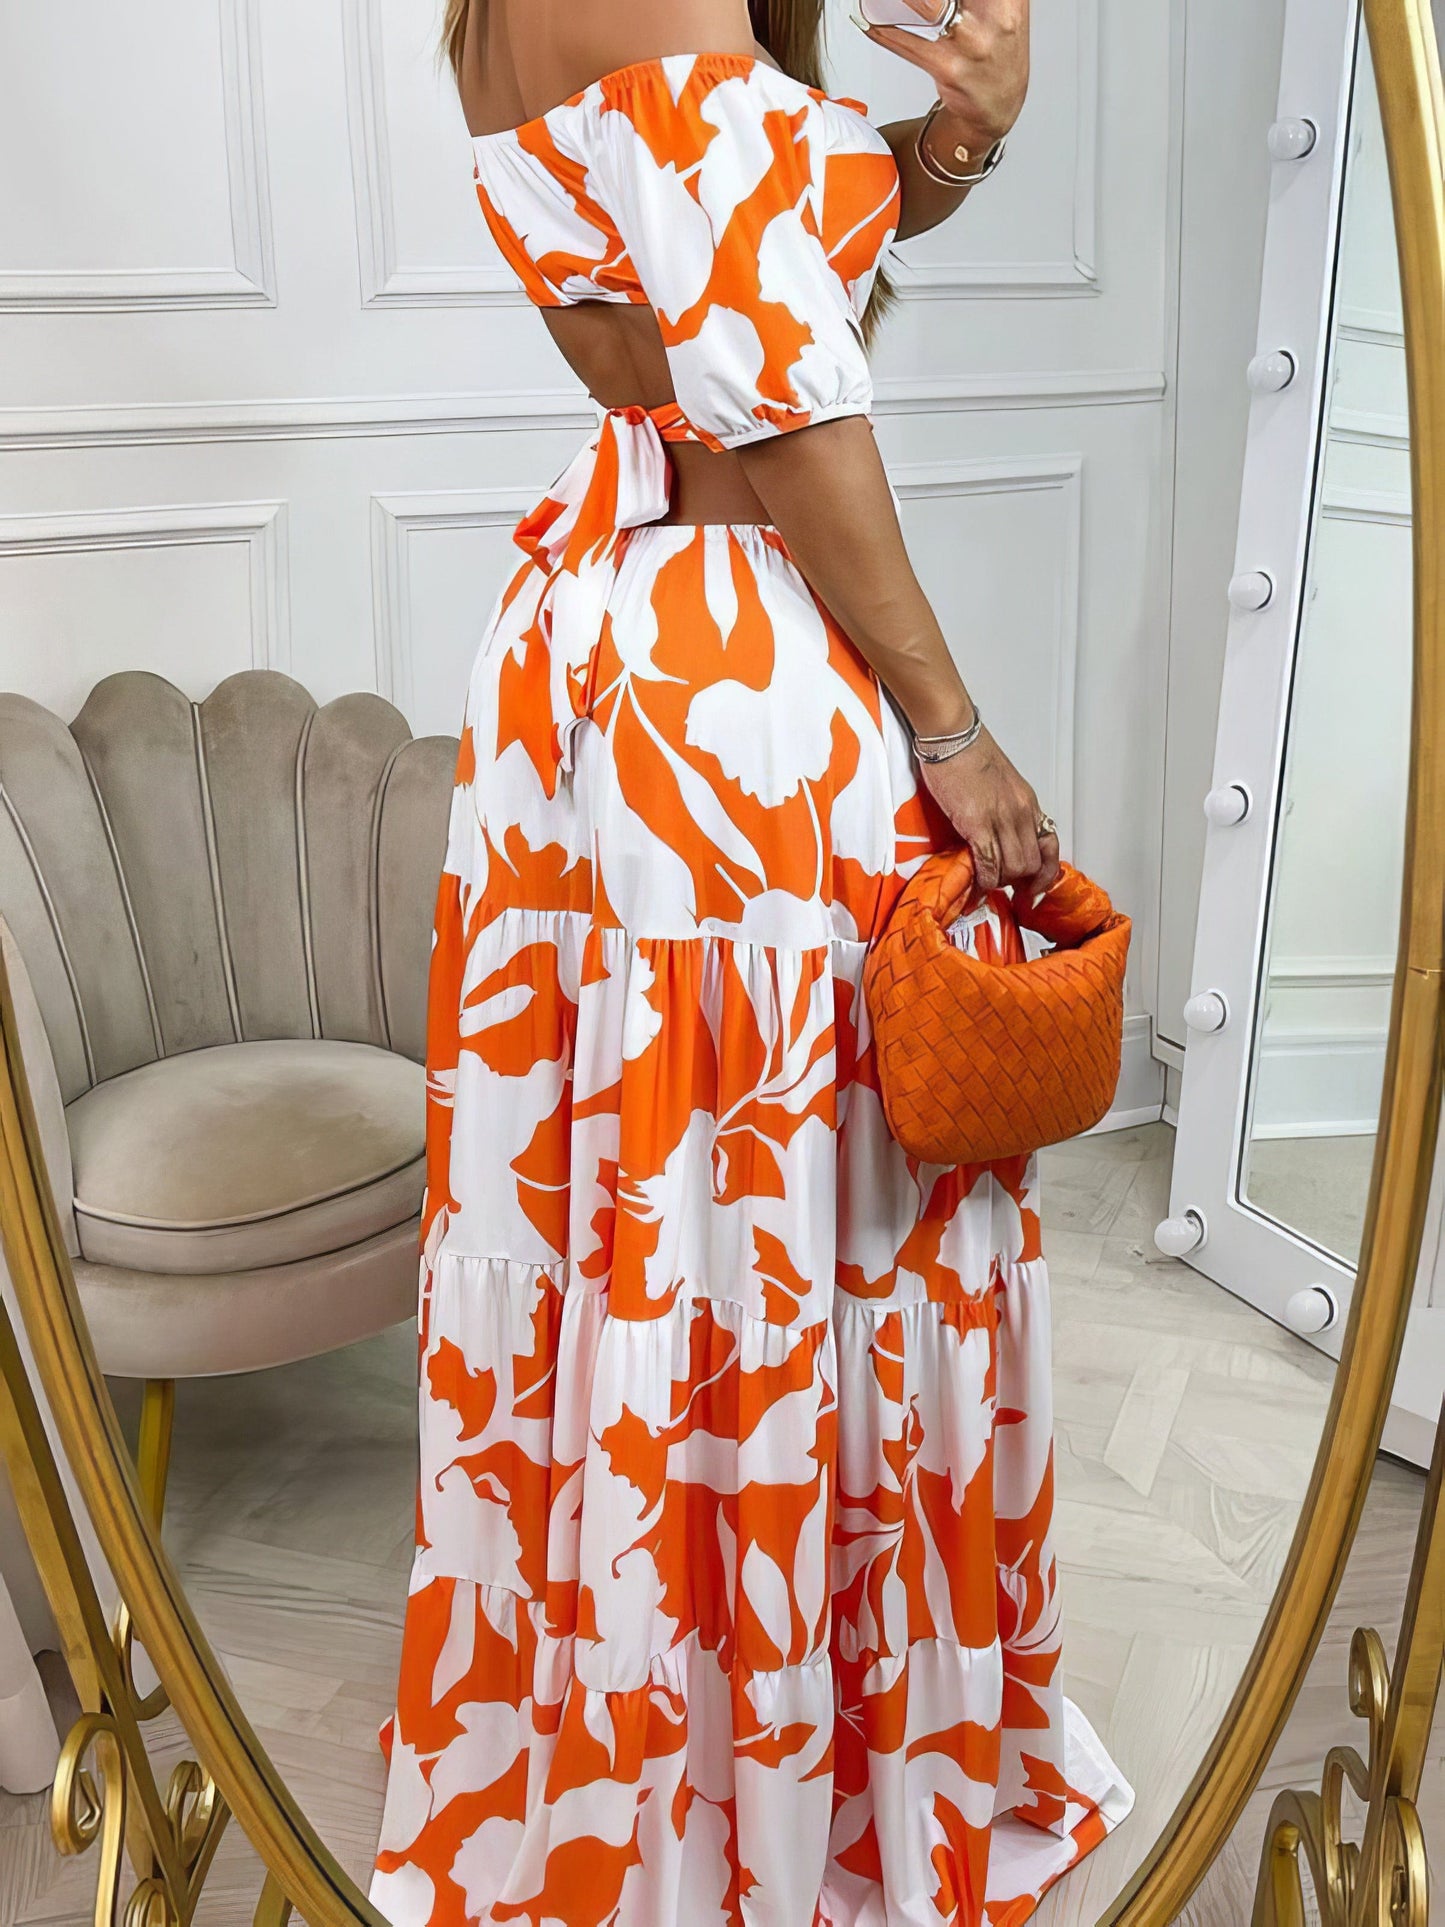 MsDressly Maxi Dresses One-Shoulder Print Cutout Short Sleeve Dress